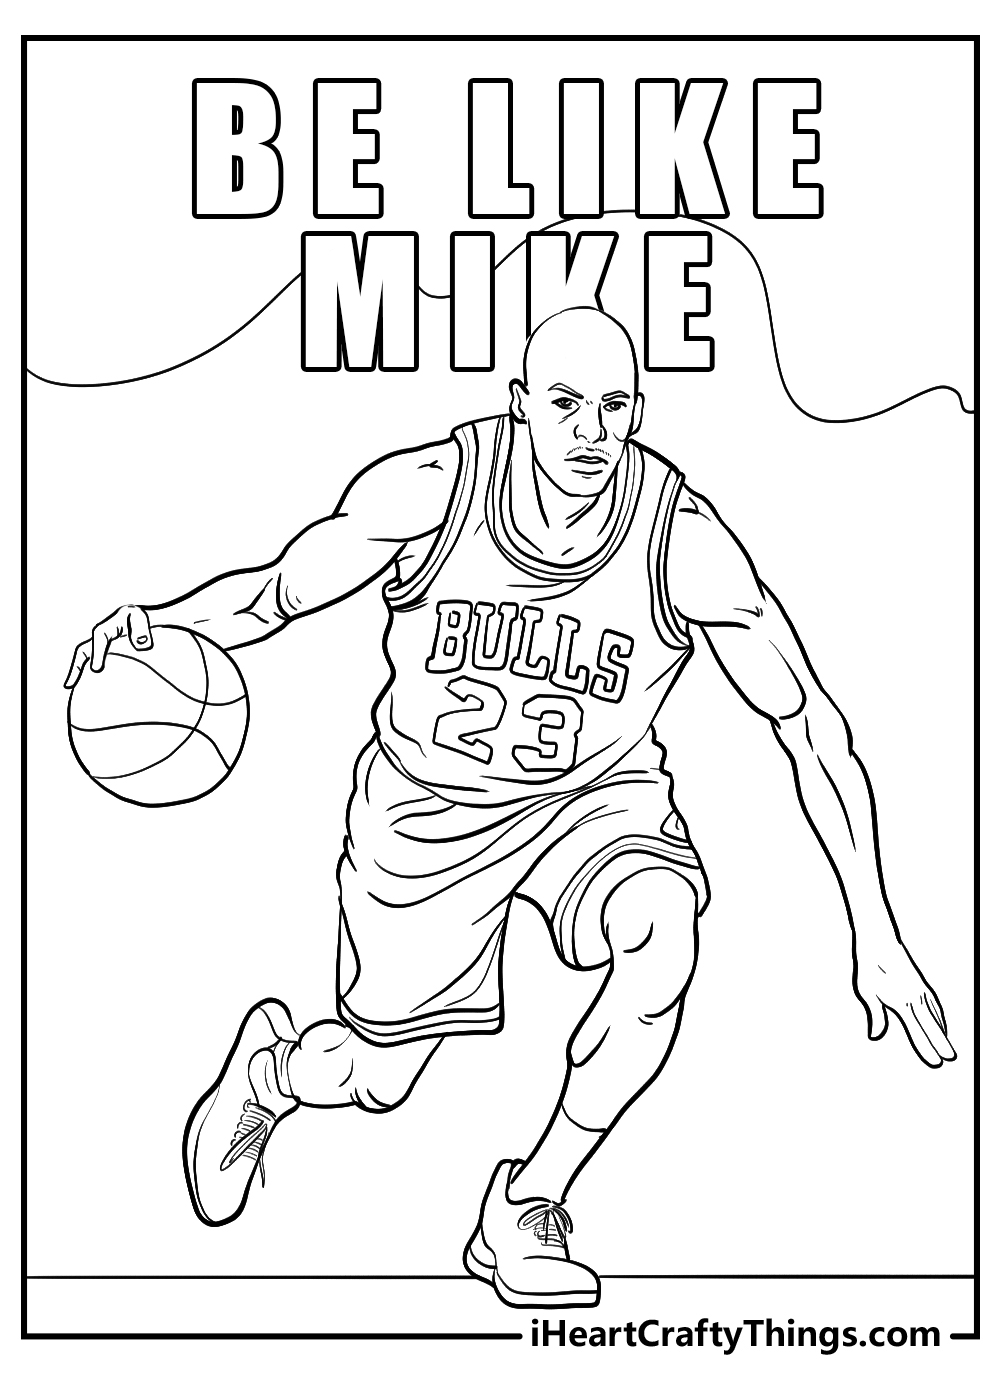 Michael Jordan coloring pages